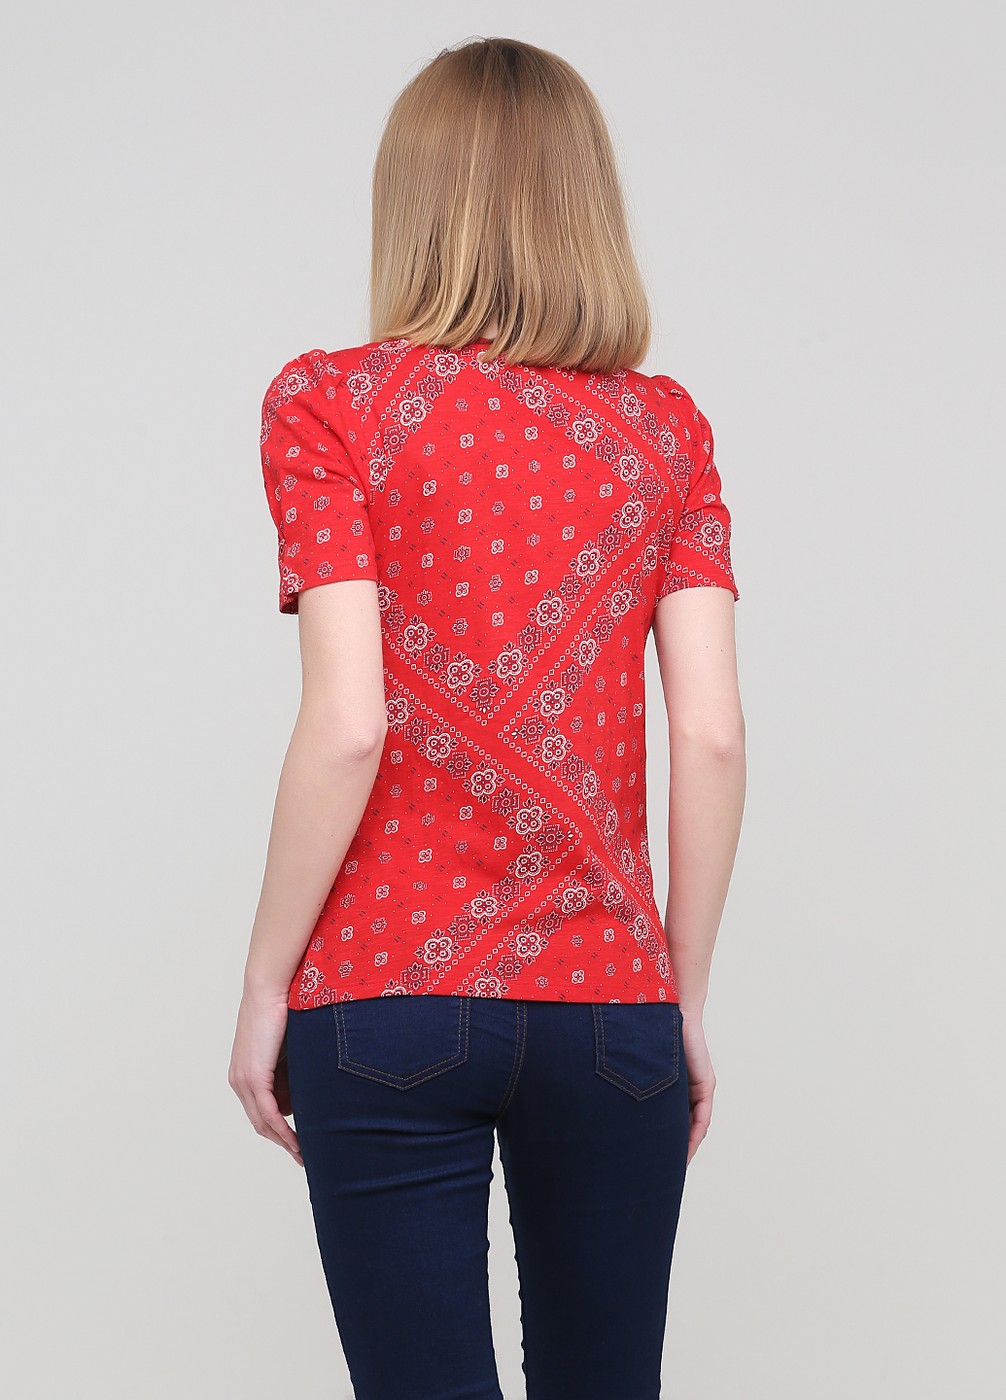 Красная футболка - женская футболка Tommy Hilfiger